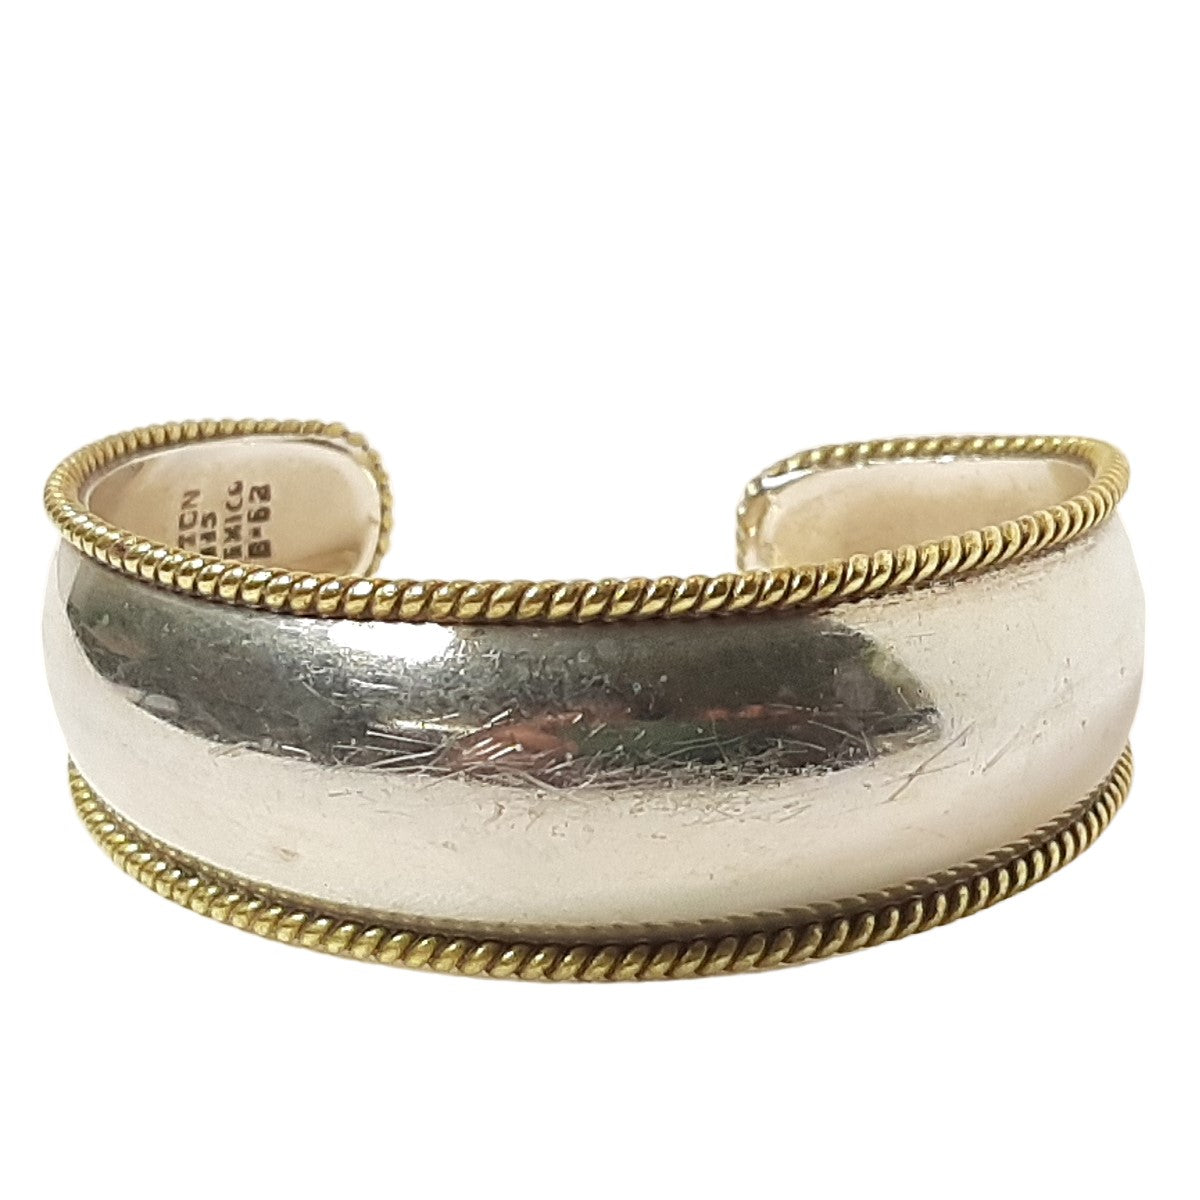 vintage silver bracelet シルバーブレスレット 925 - アクセサリー